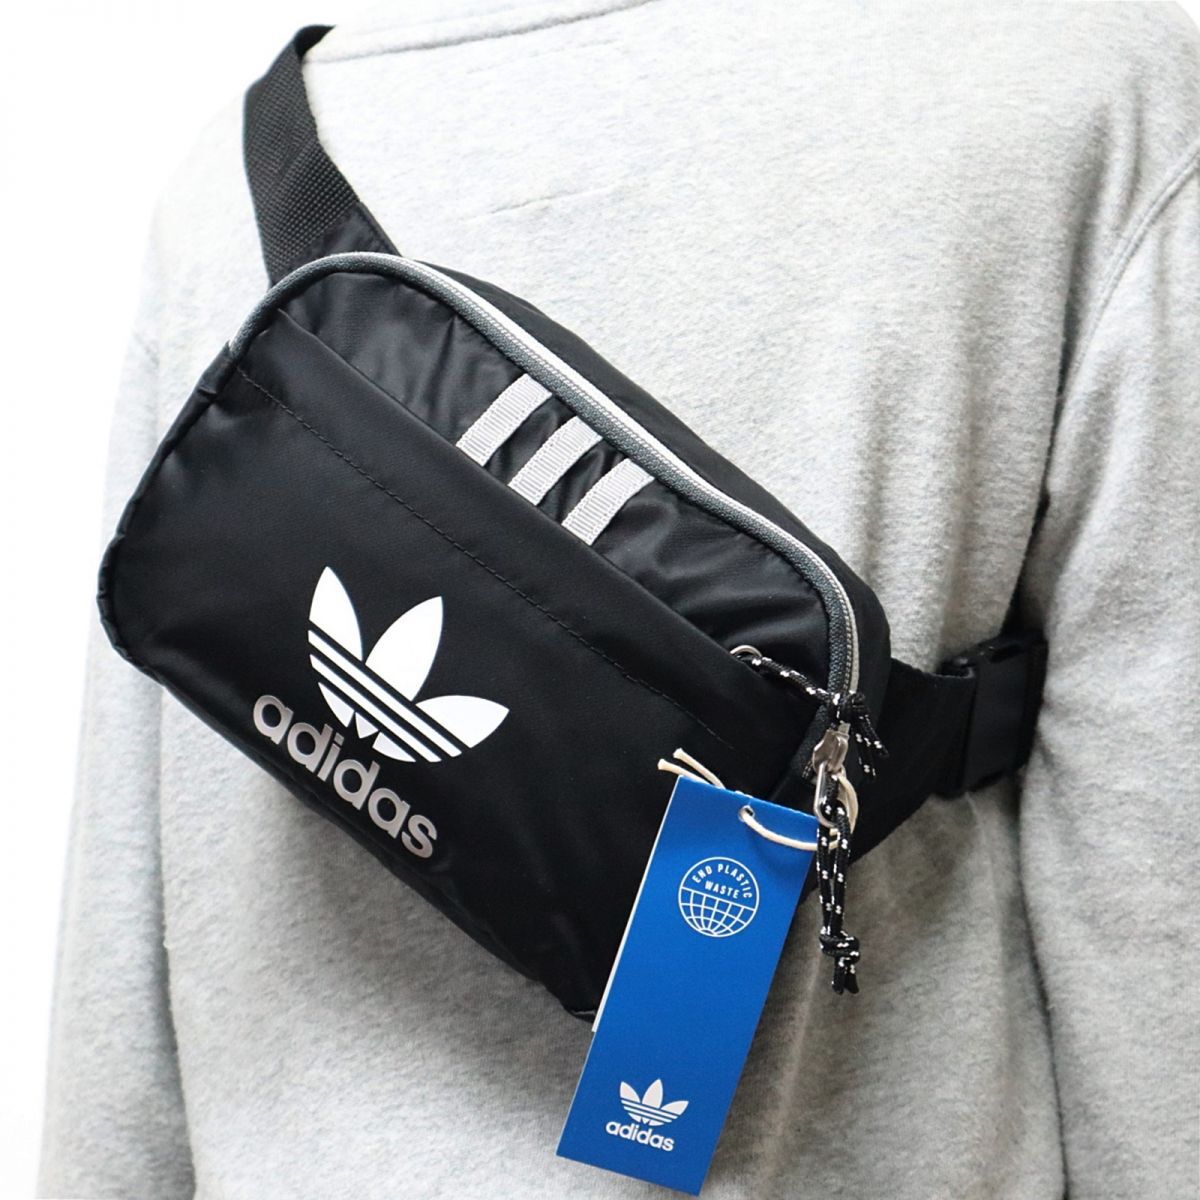 * Adidas adidas originals new goods Adi color shoulder body bag waist bag pouch BAG black [IJ0768] six *QWER*